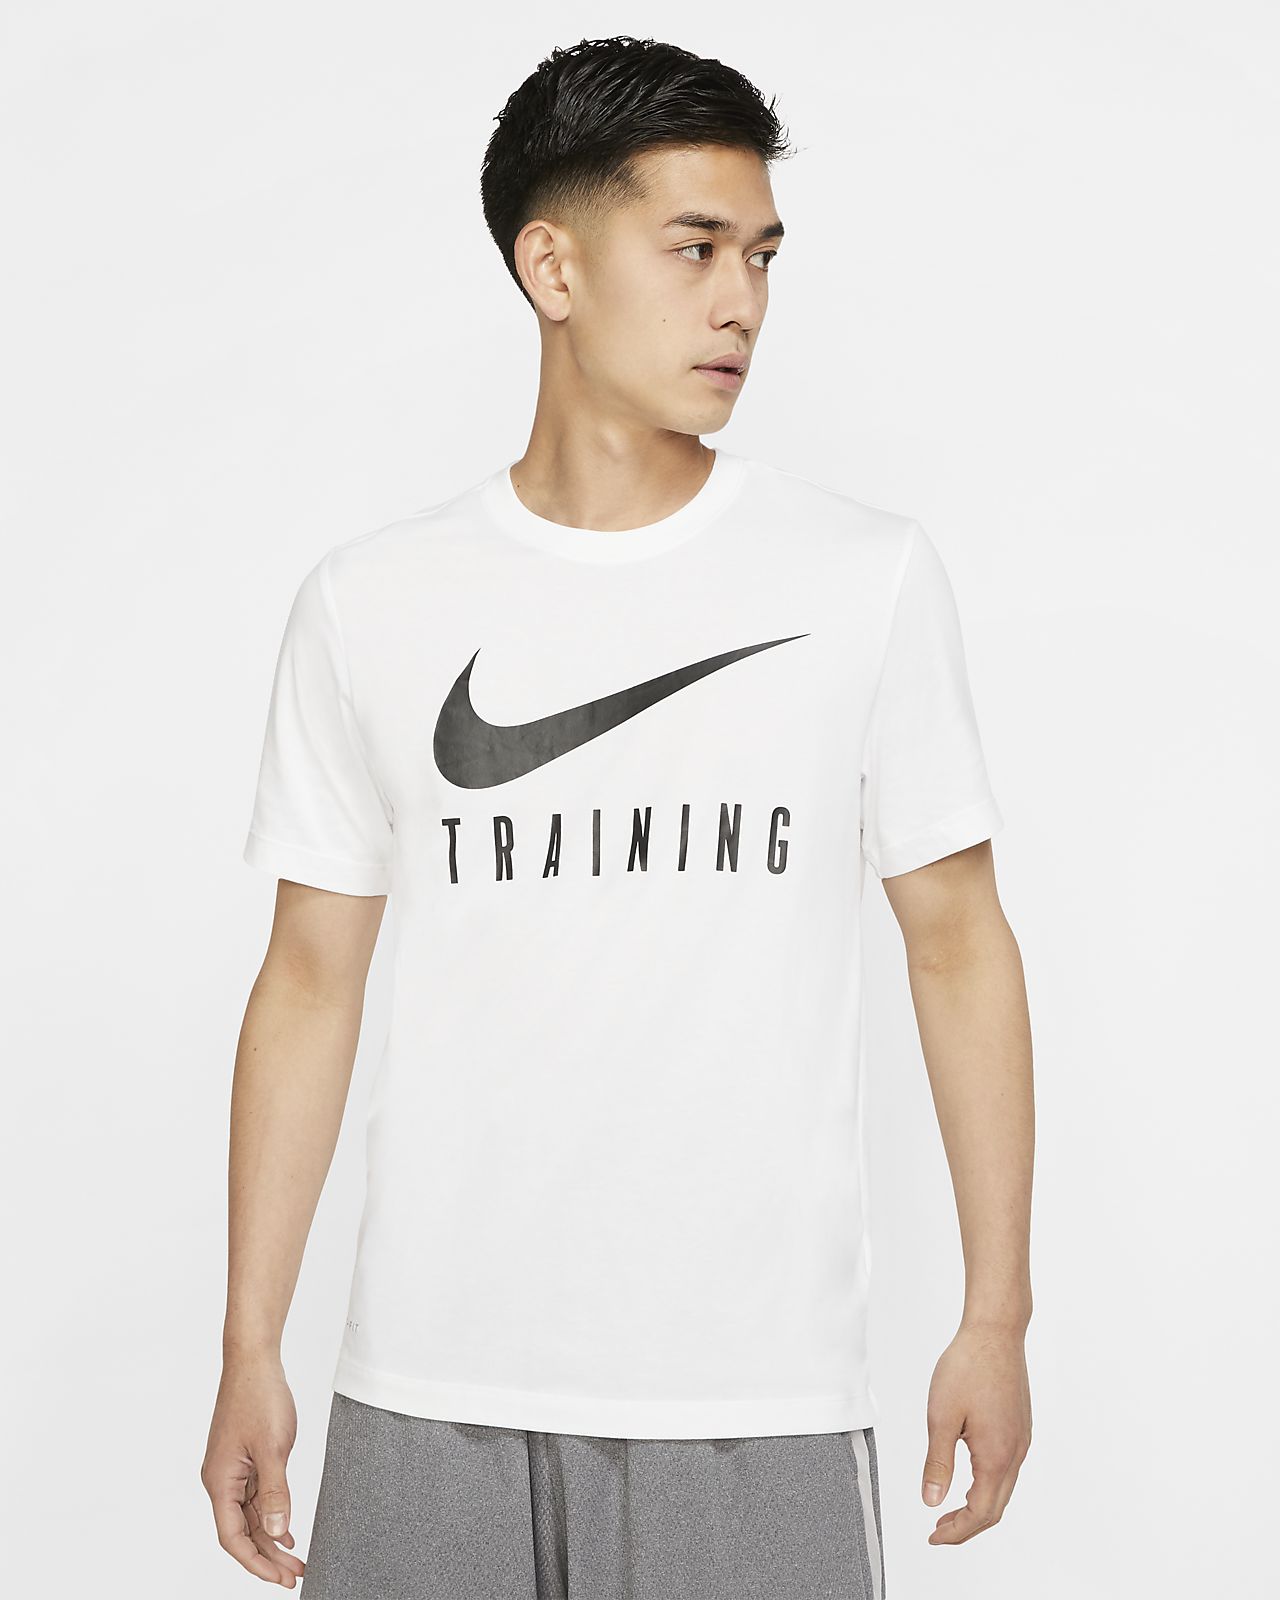 camisetas nike training shopping 66c8b e0522